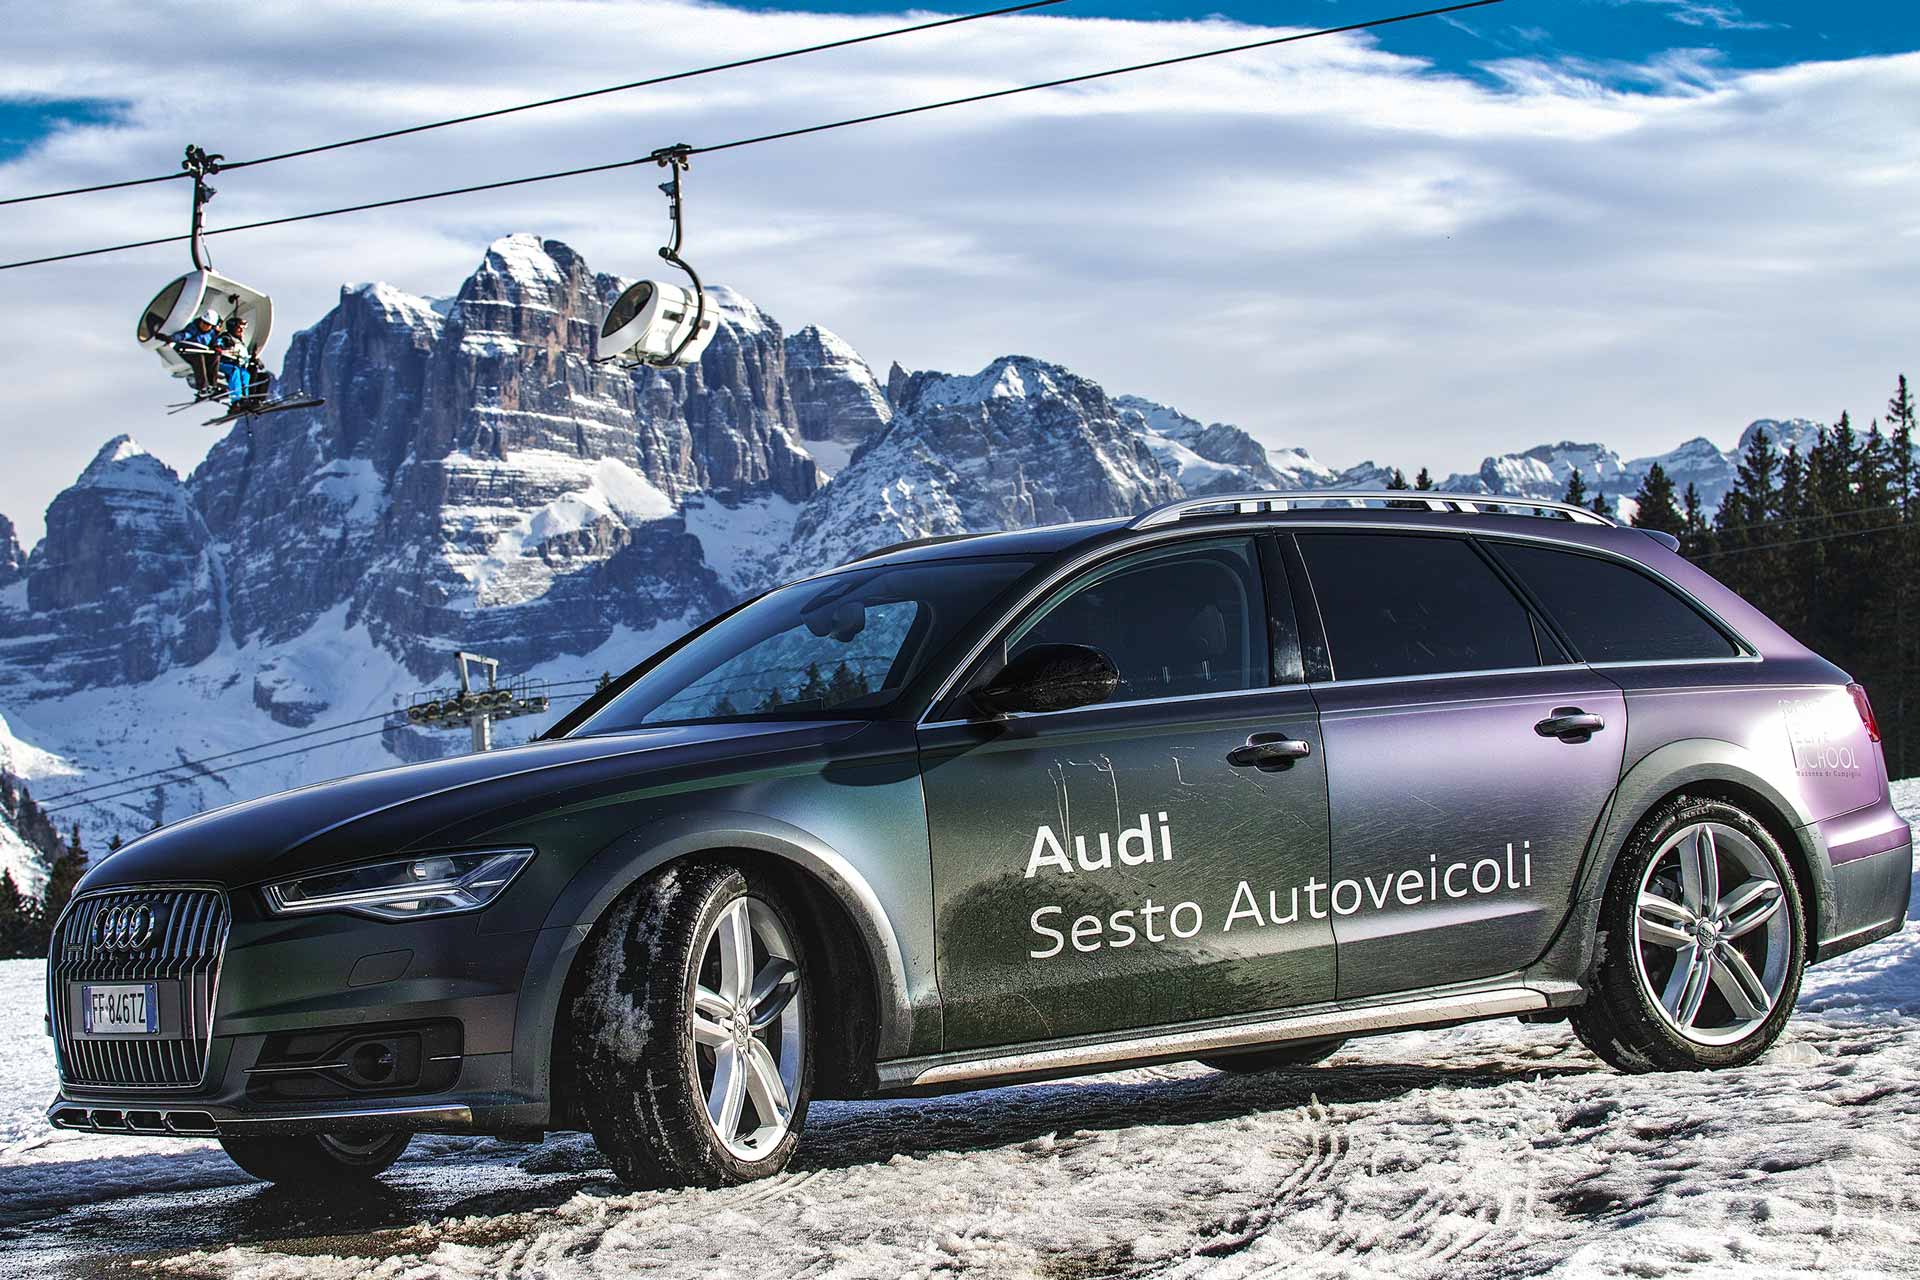 SPORT ELITE SCHOOL - Partner Audi Sesto Autoveicoli 6